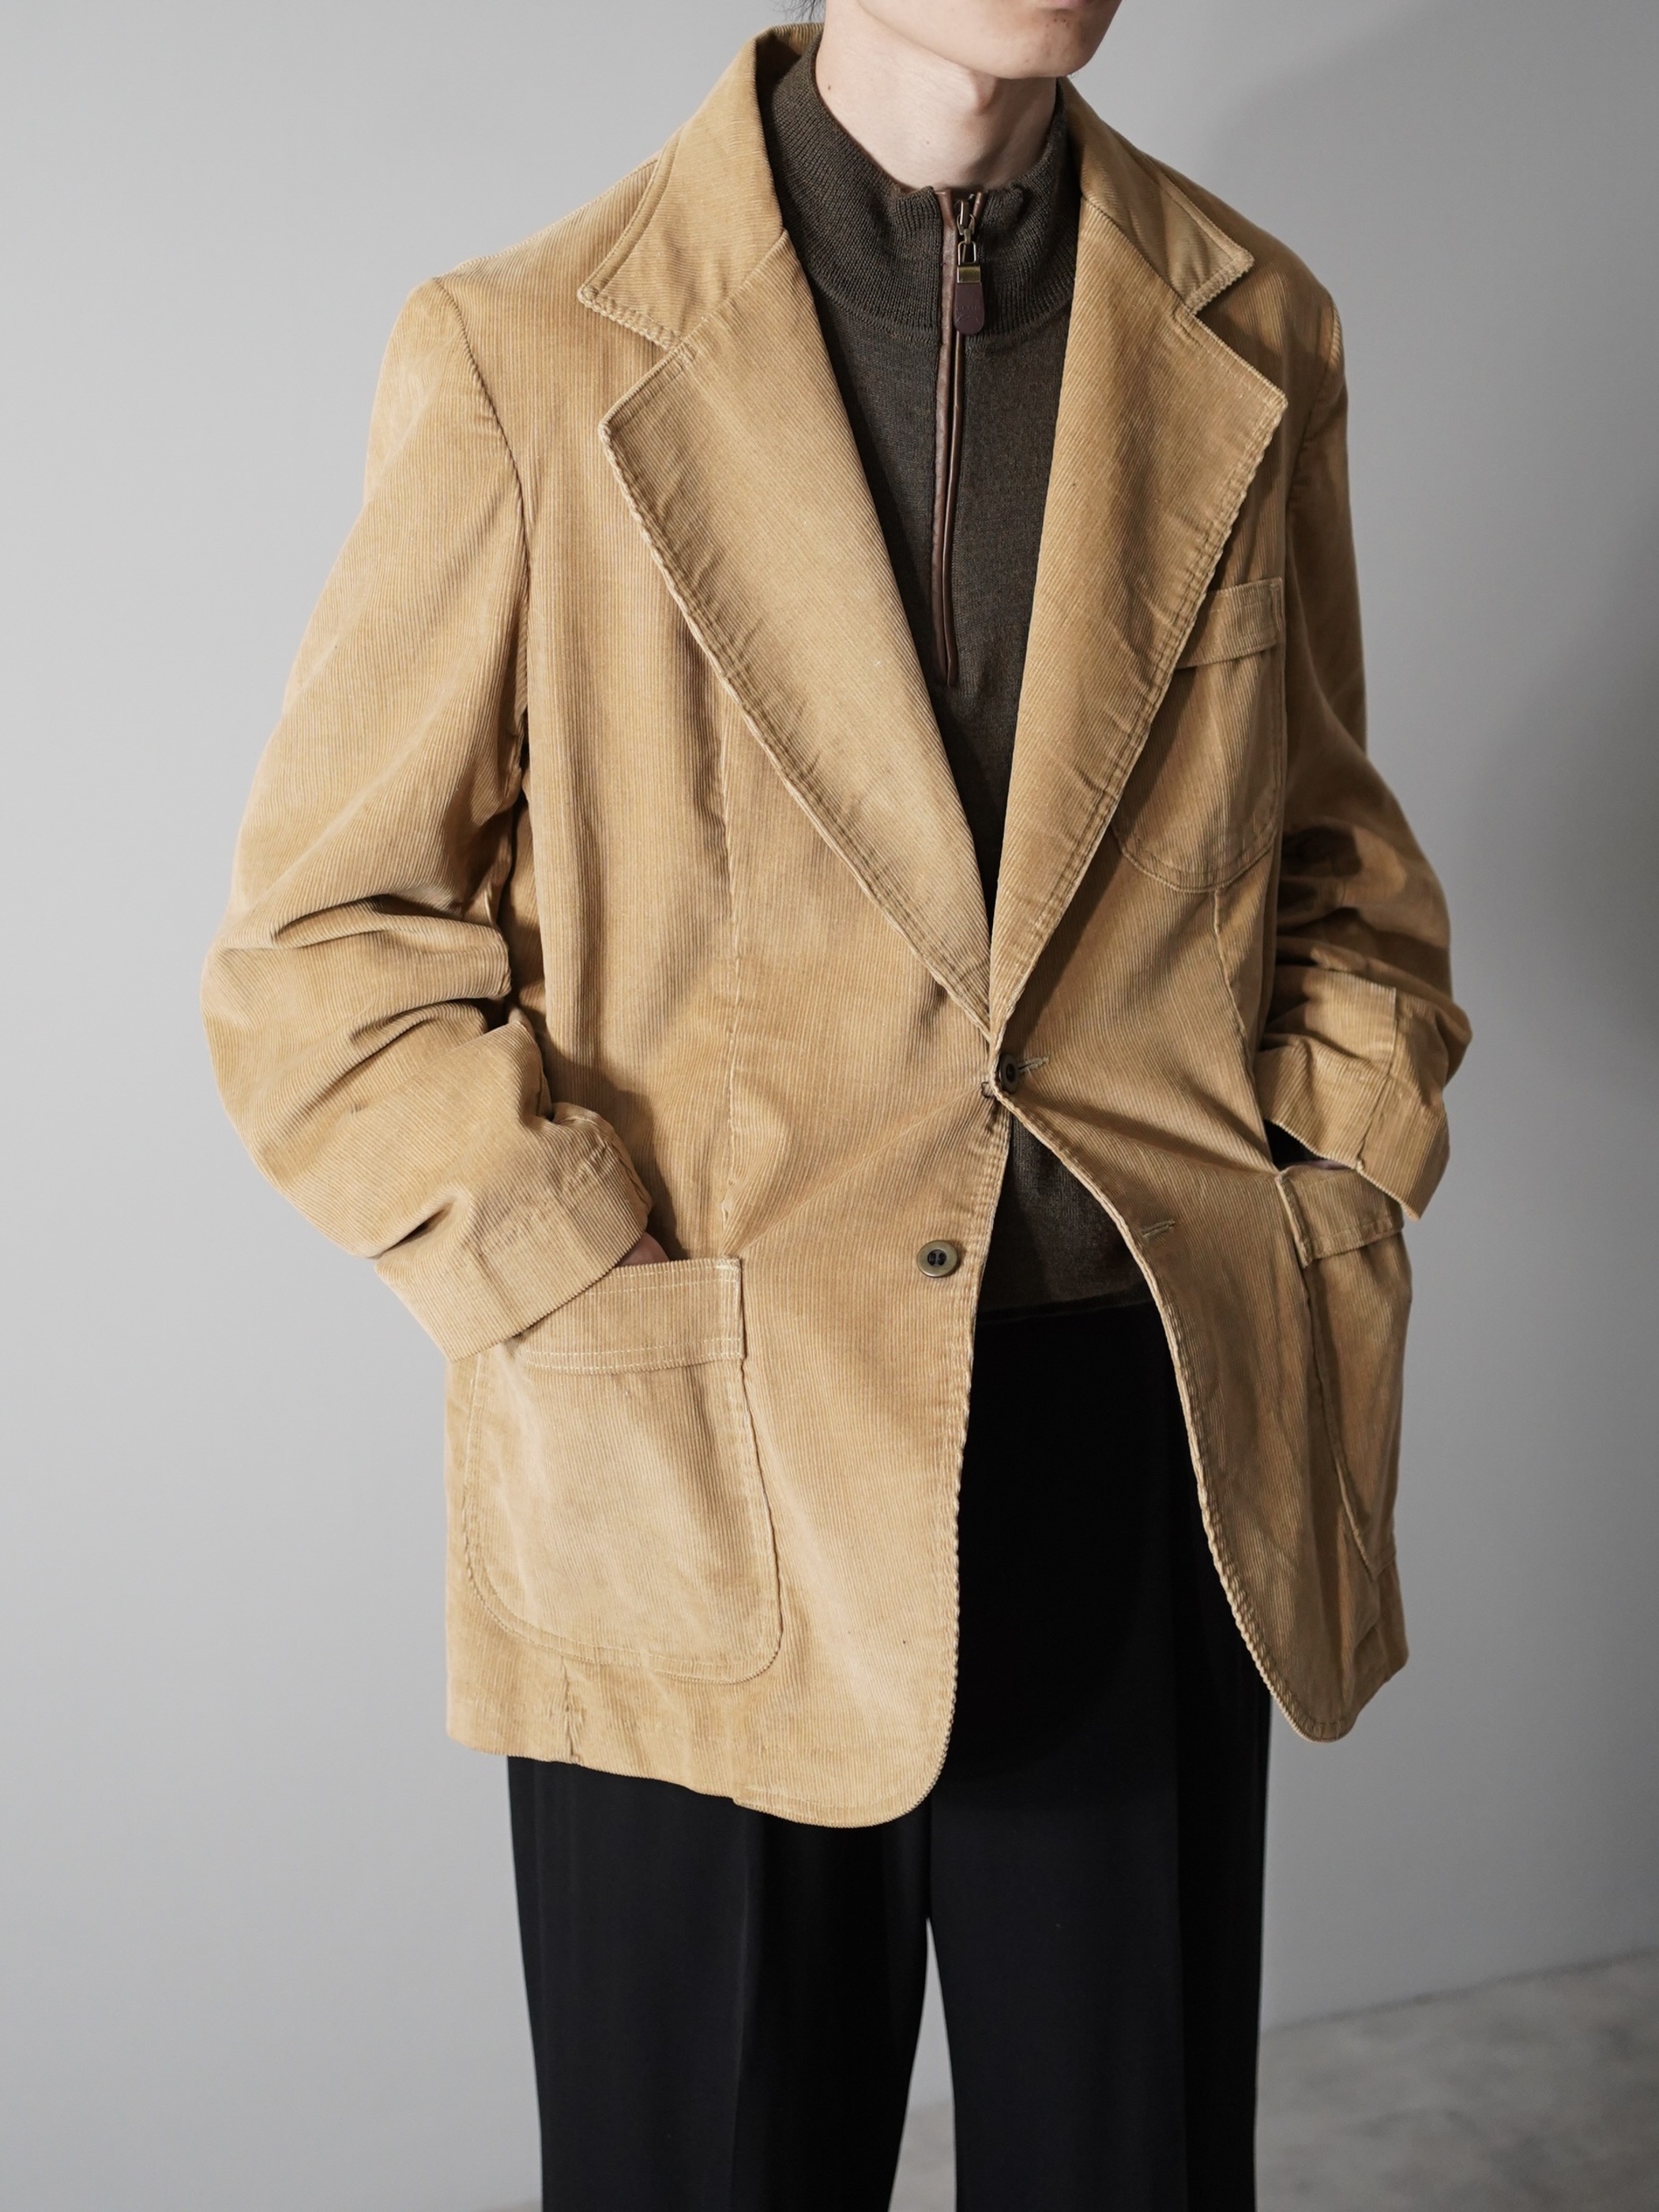 1970-80's MAVERICK Corduroy tailored jacket / Made in USA